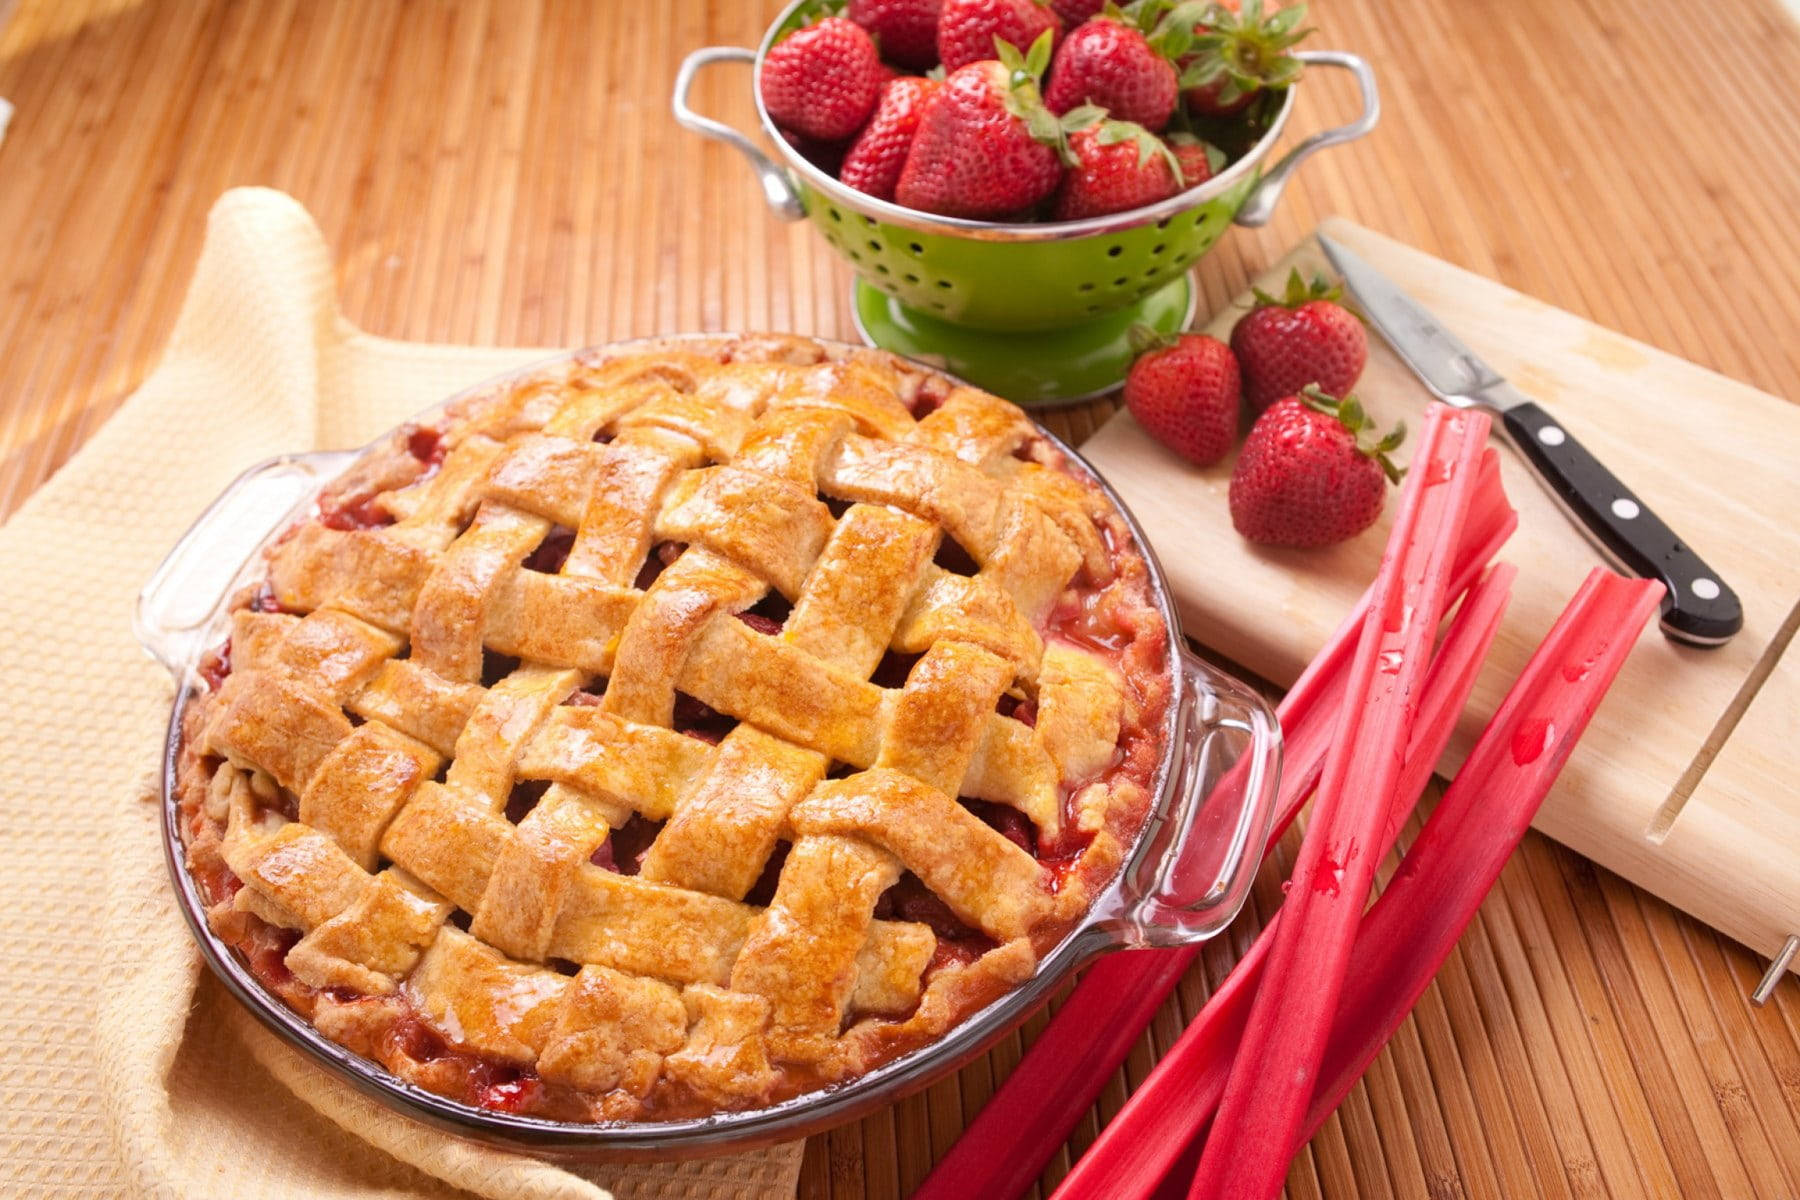 Garden Rhubarb Pie With Strawberry Wallpaper